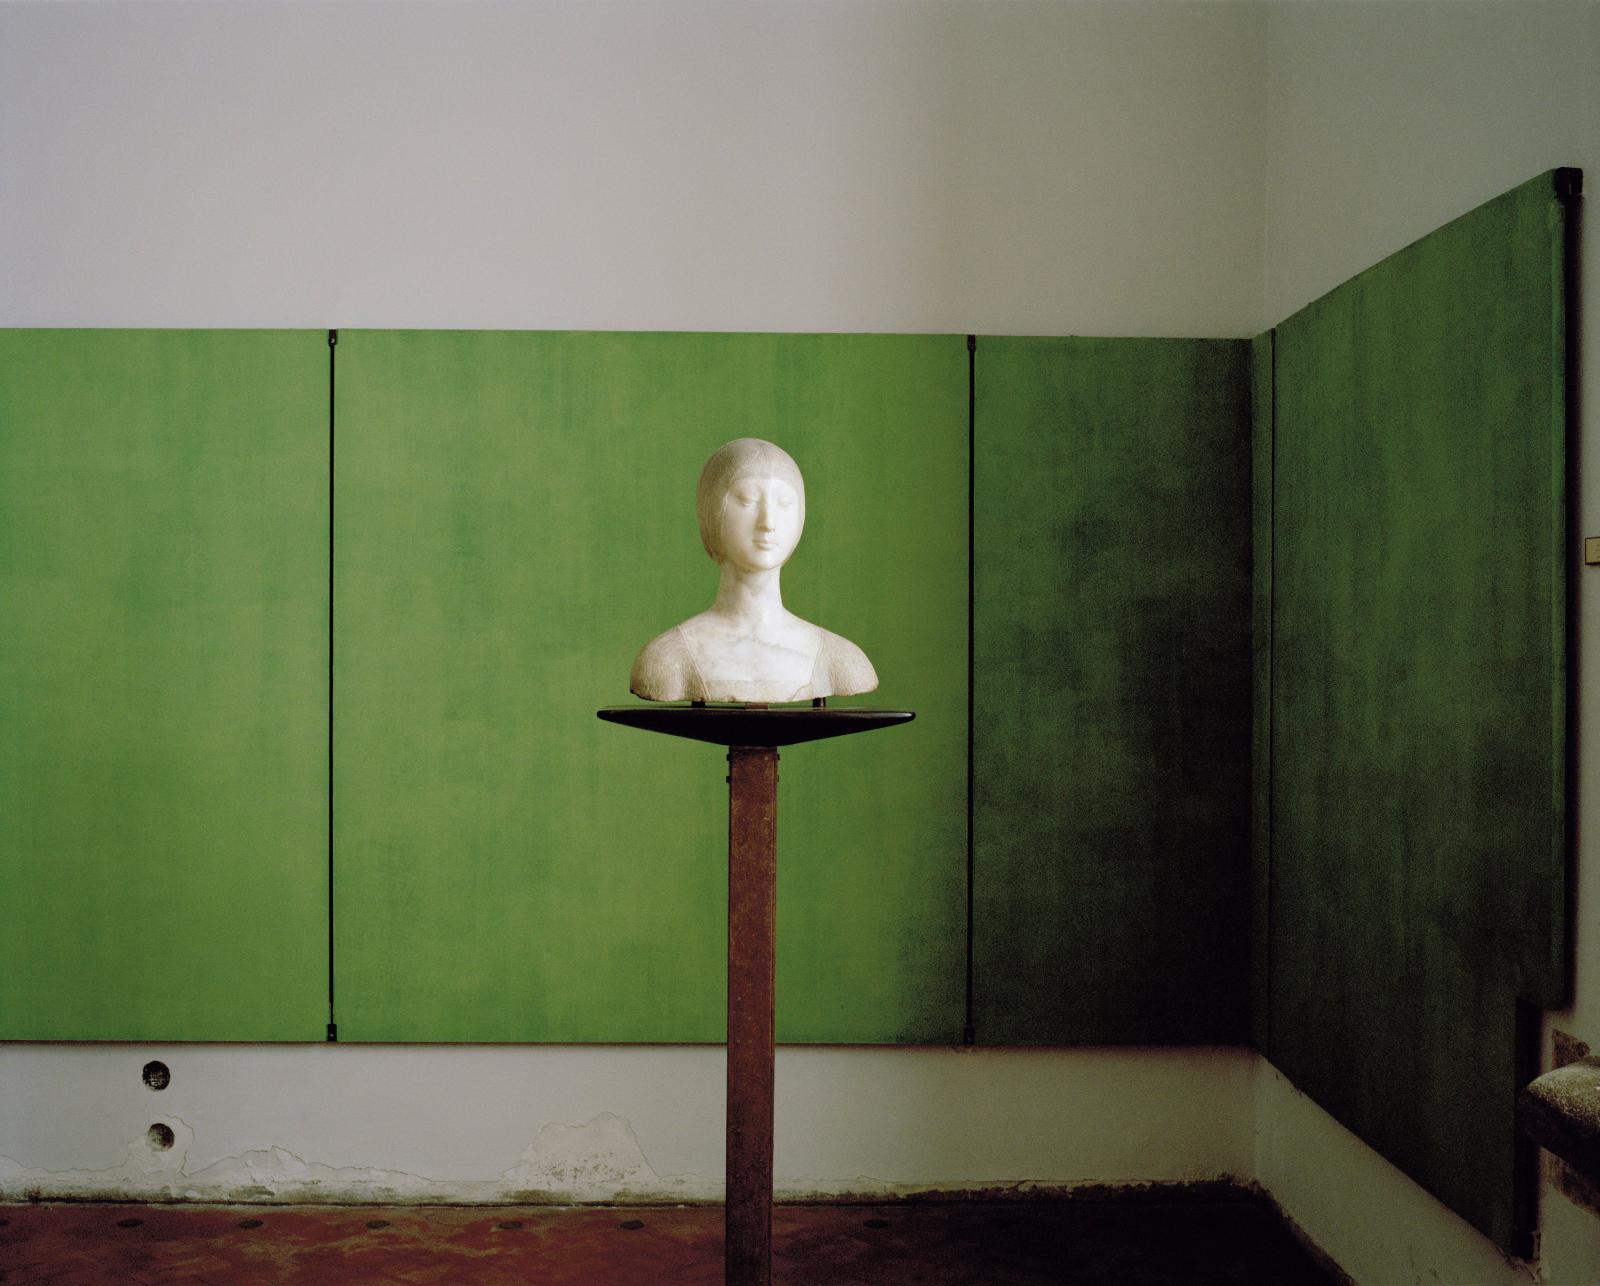 Armin Linke (né en 1966), Carlo Scarpa, Palazzo Abatellis, salle avec un buste de dame, Palerme, Italie, 2015. © Armin Linke, 2015 